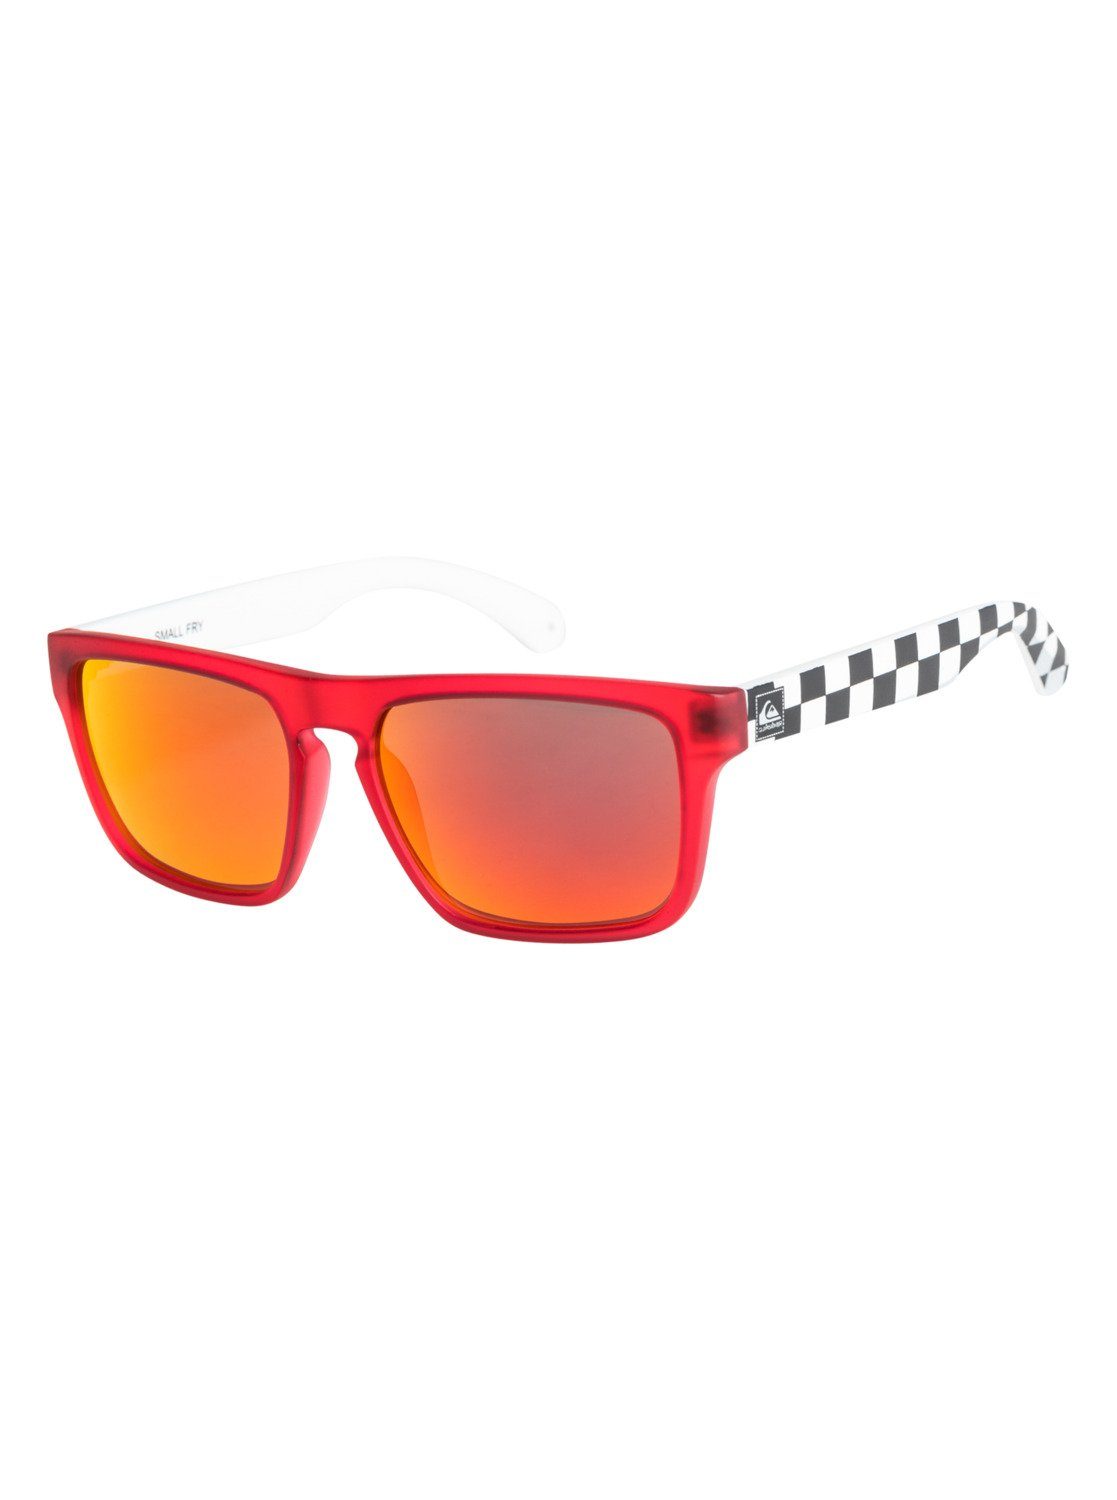 Sonnenbrille G850-Rahmen Quiksilver Spritzgegossener Small Fry,